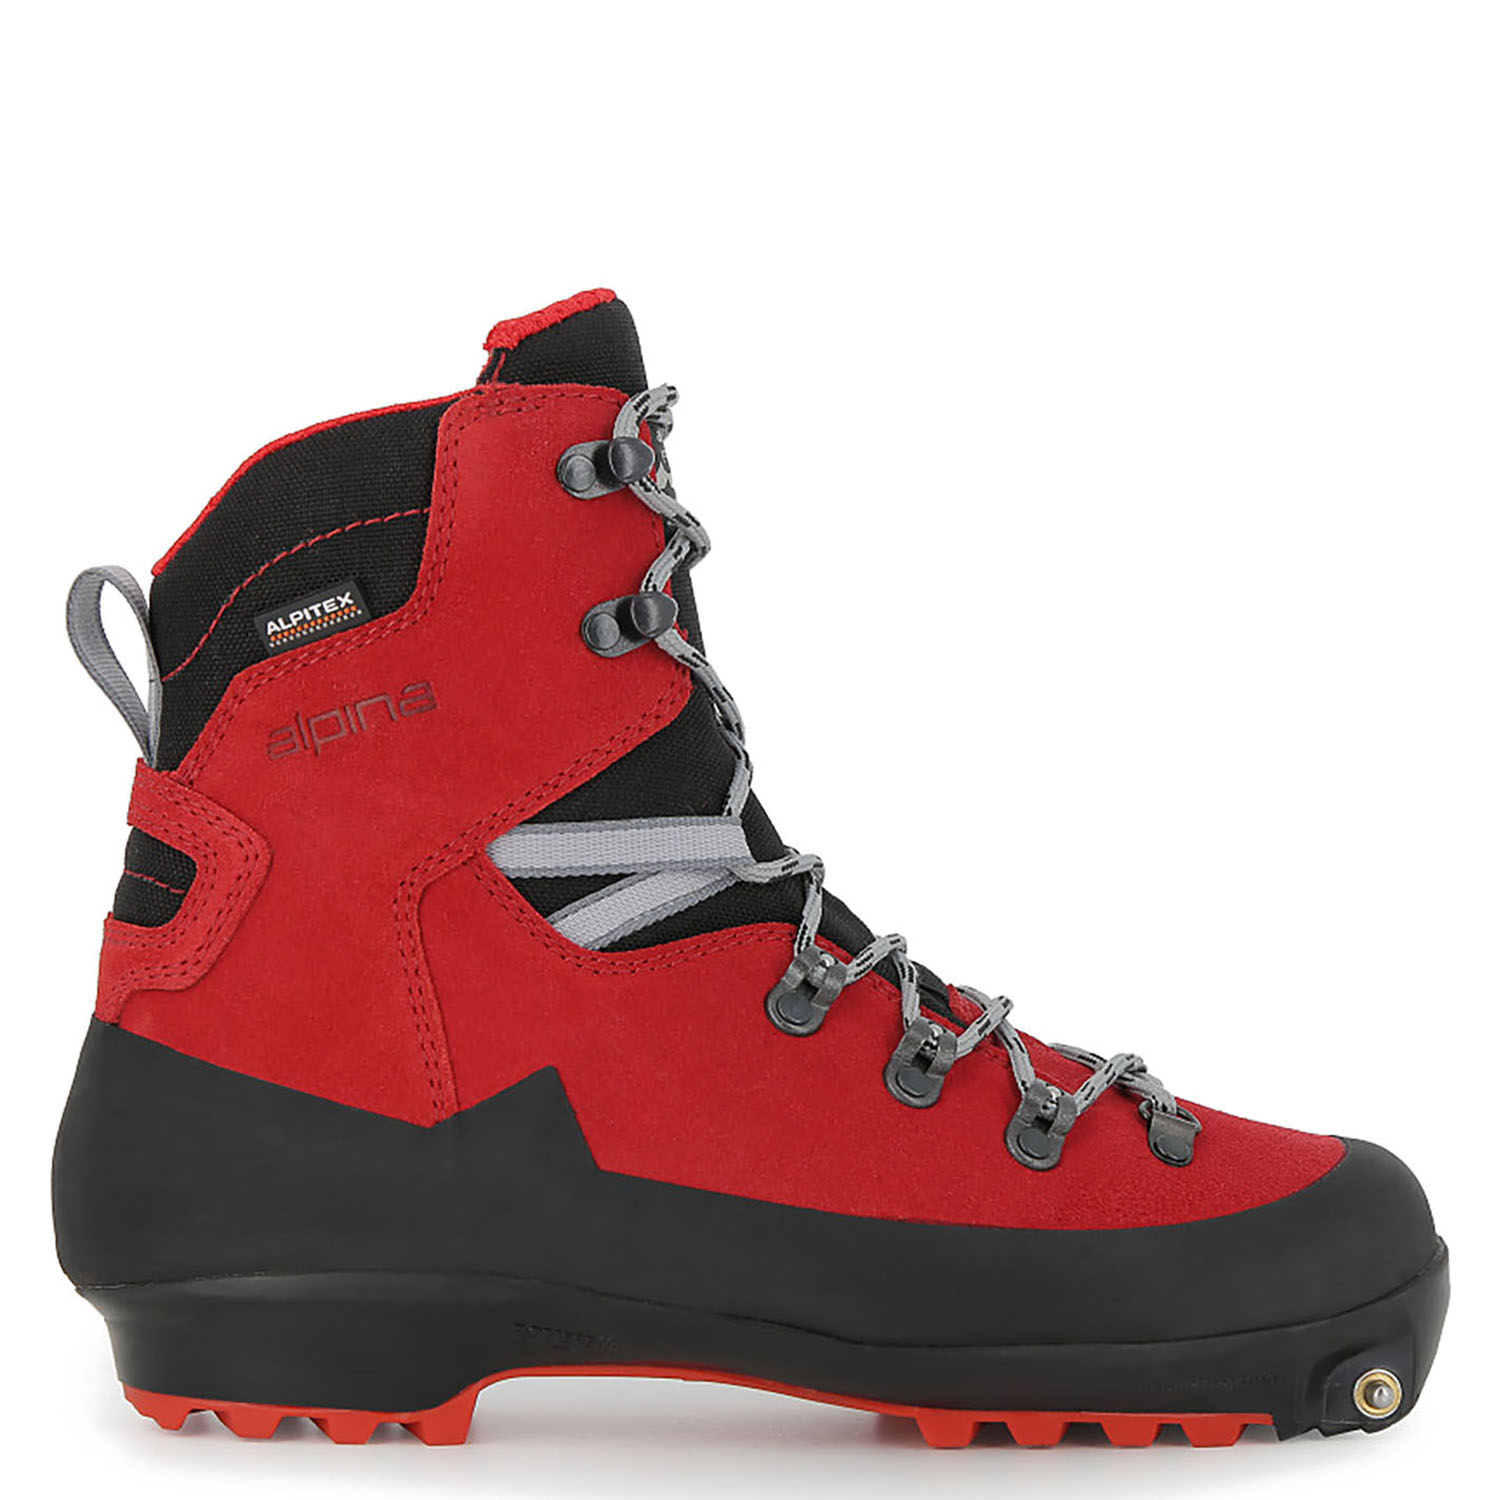 Ботинки Alpina ESK 2.0. Alpina Cross track ботинки зимние. Ботинки туристические Sabo Альпина. Ботинки Alaska extreme Lite. Boot 2024